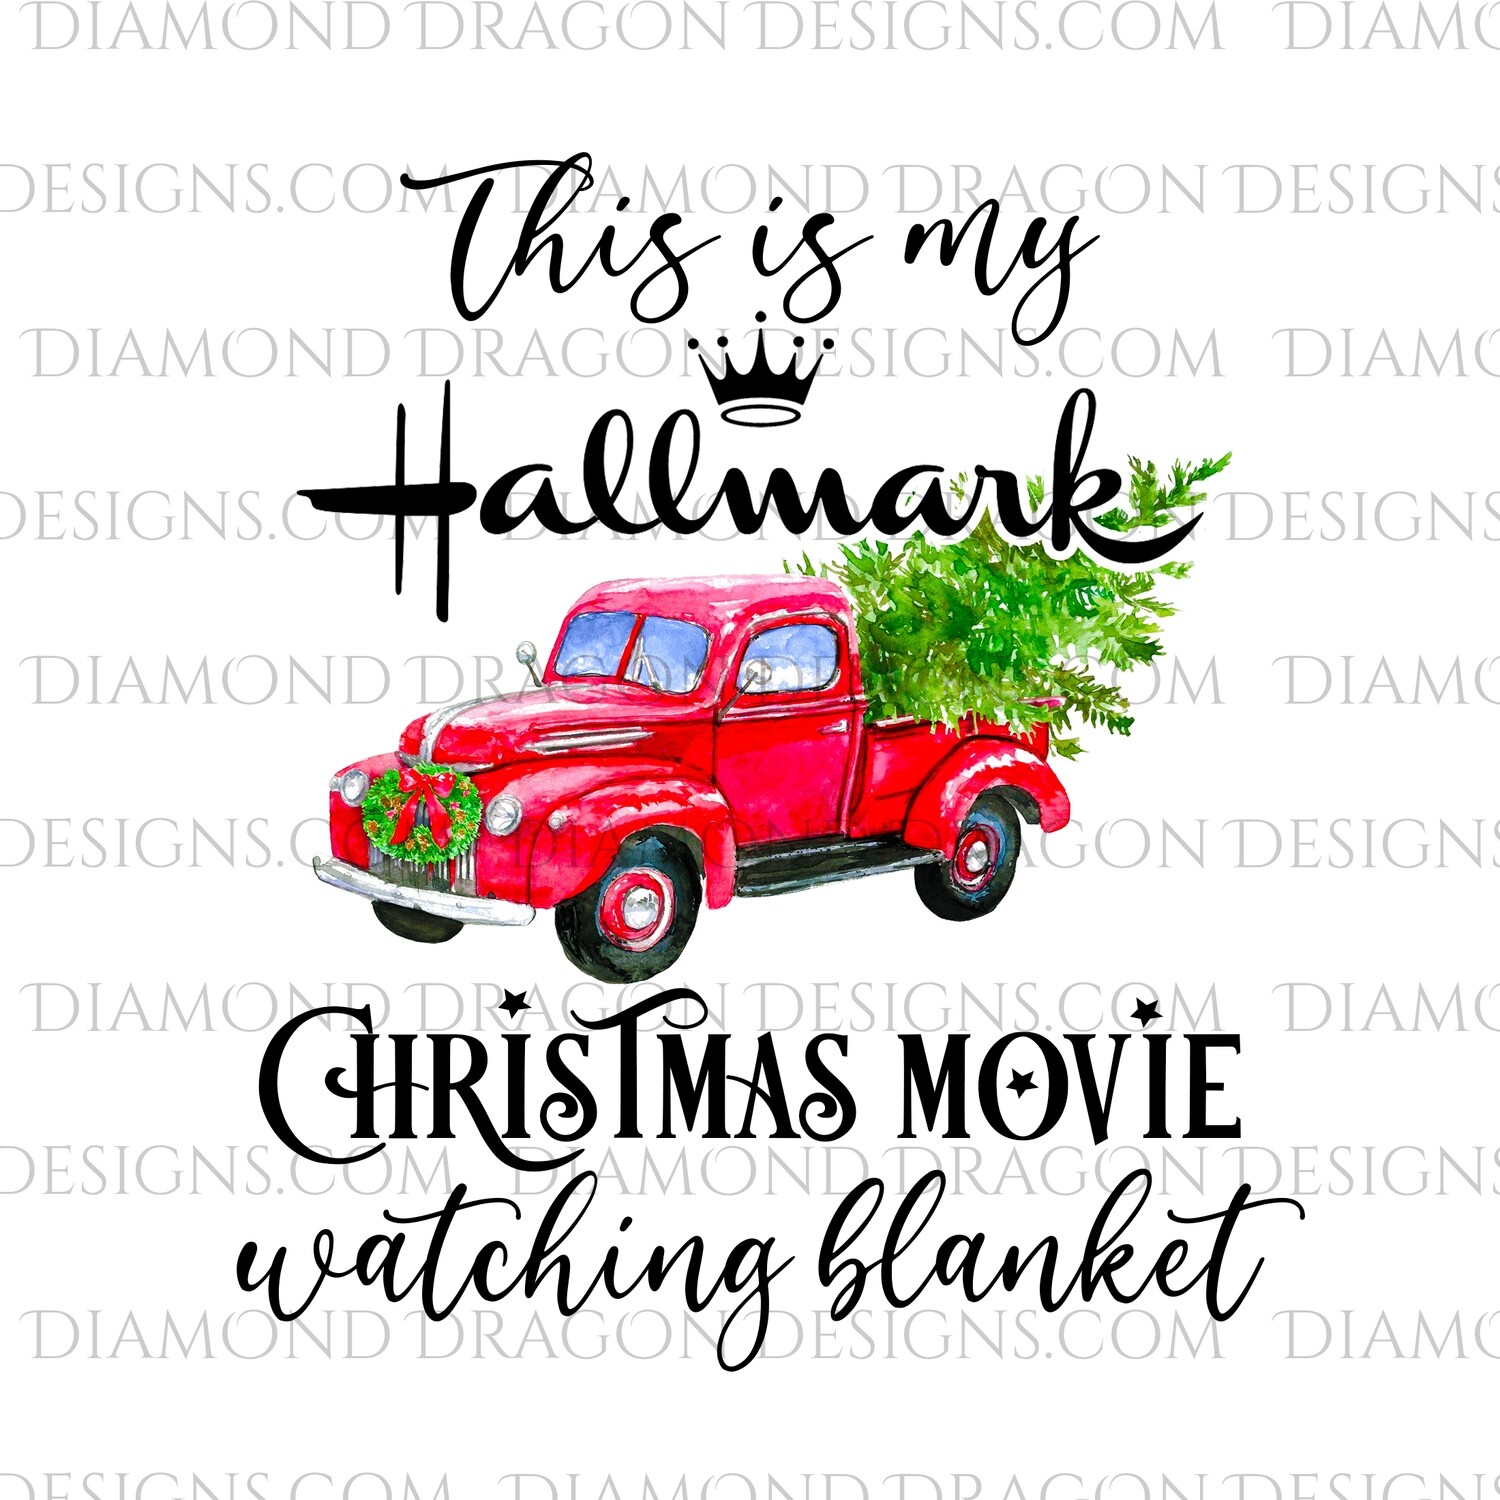 Christmas - Red Truck, Christmas Tree, Hallmark Christmas Movie Watching Blanket, Red Vintage Truck, Digital Image